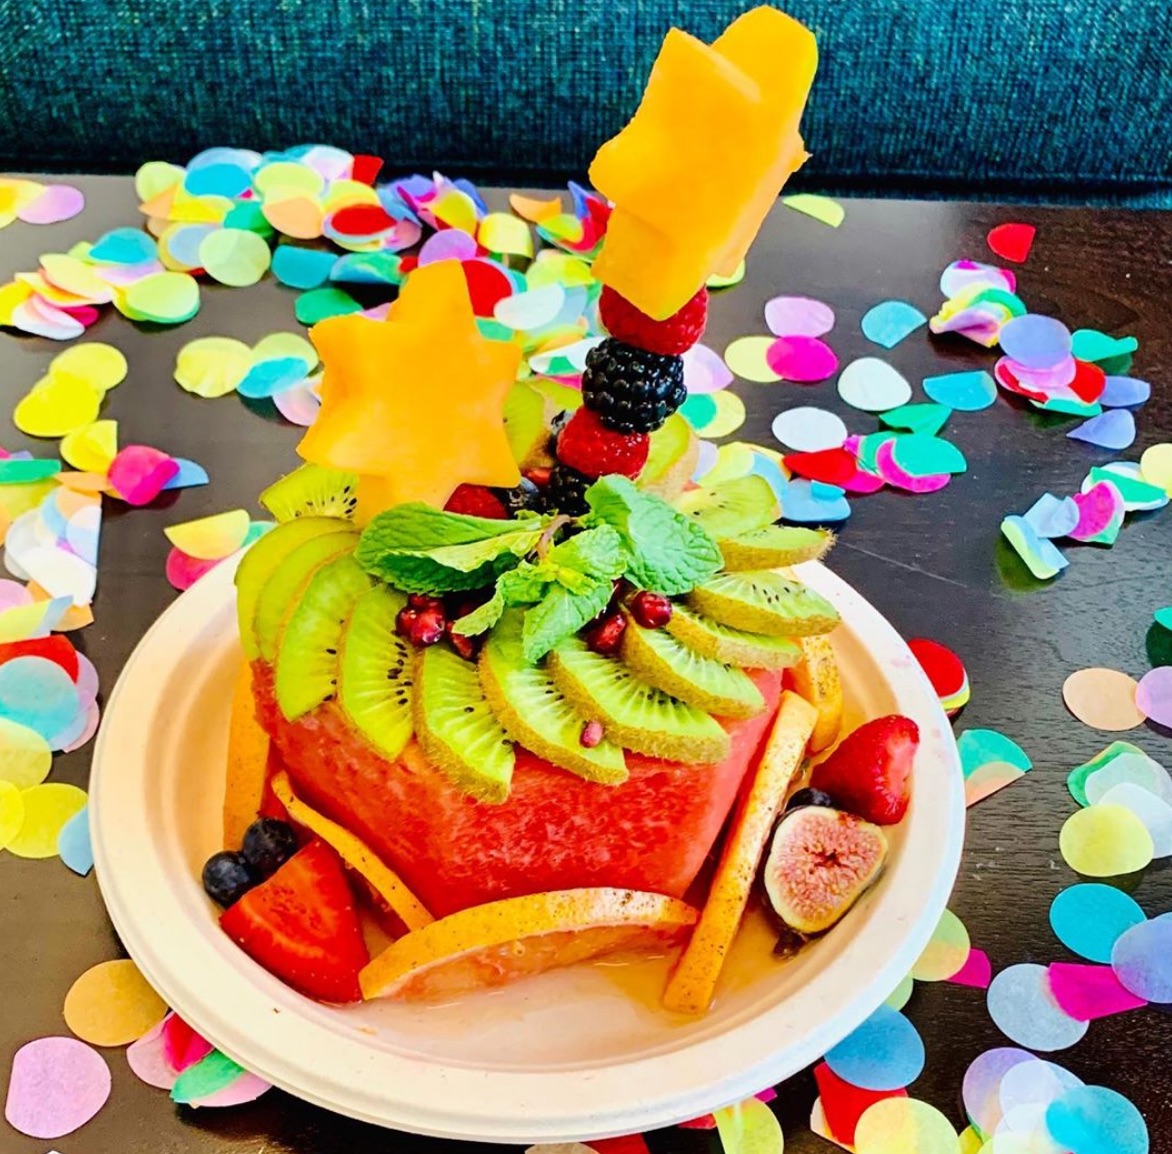 Simon Doonan's birthday fruit cake. Image courtesy of Doonan's Instagram